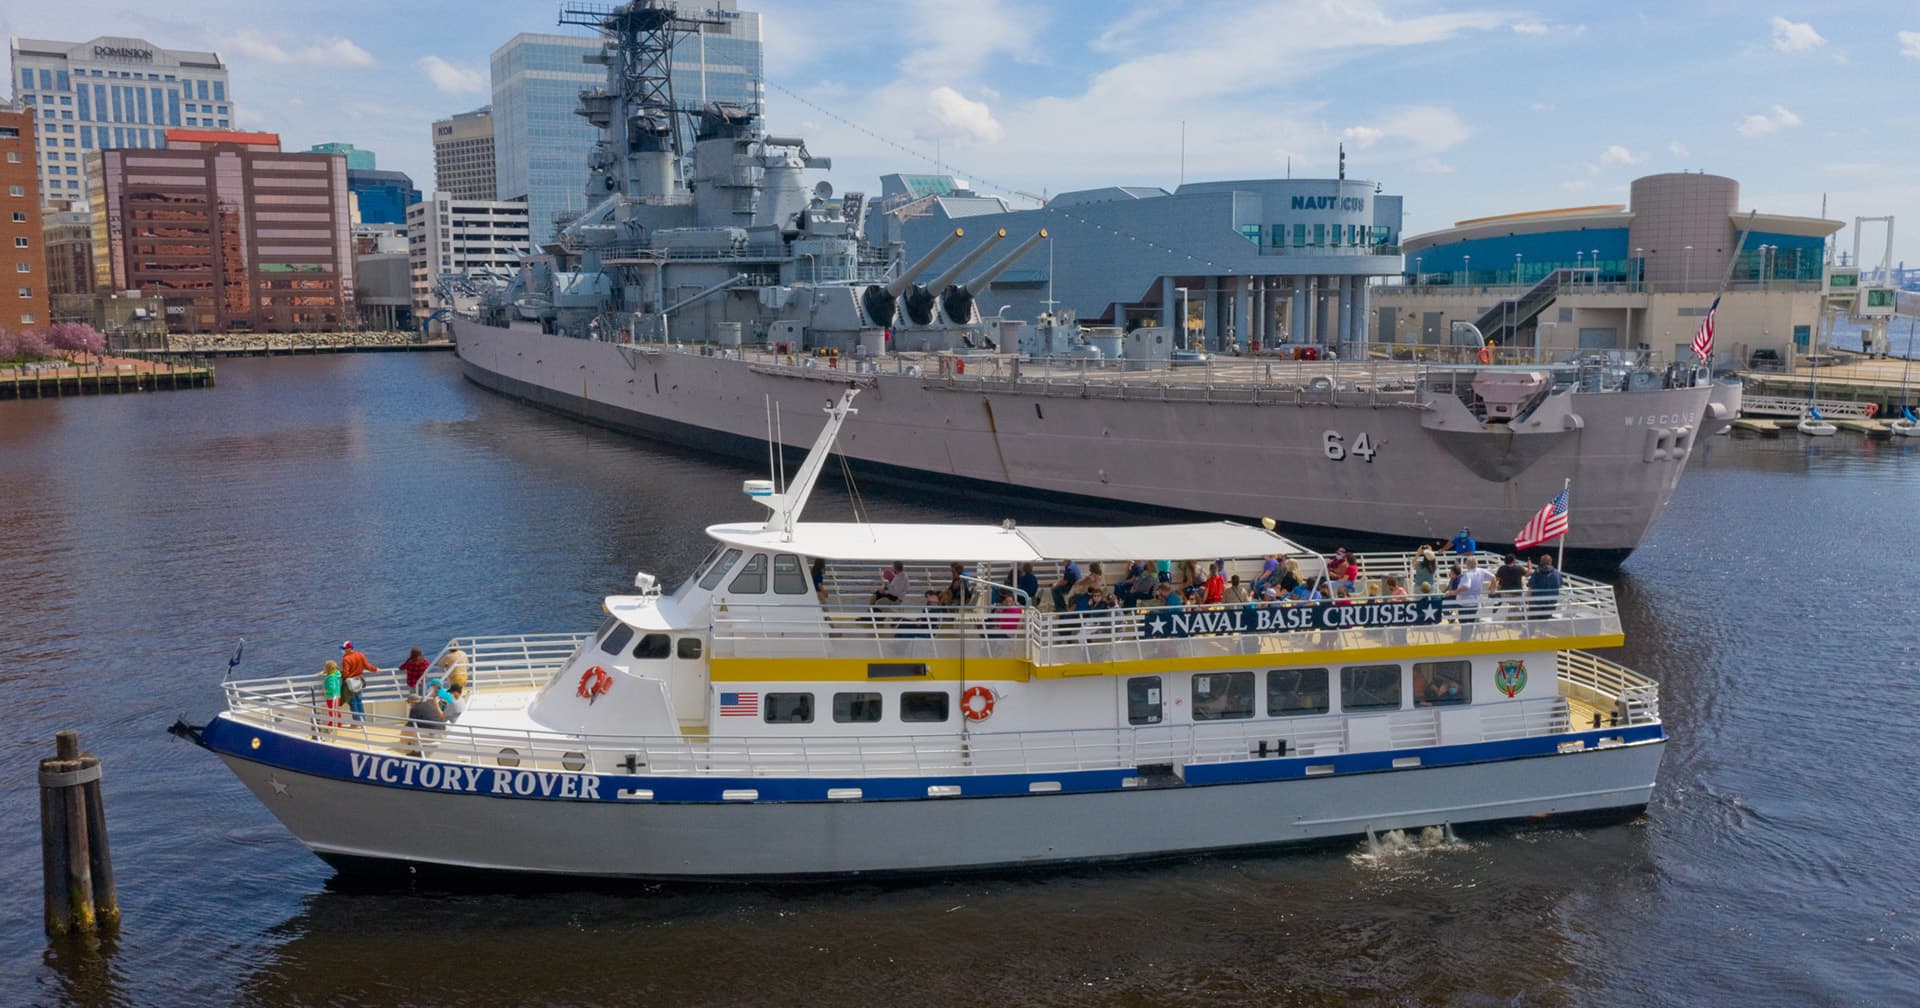 naval ship tours in virginia